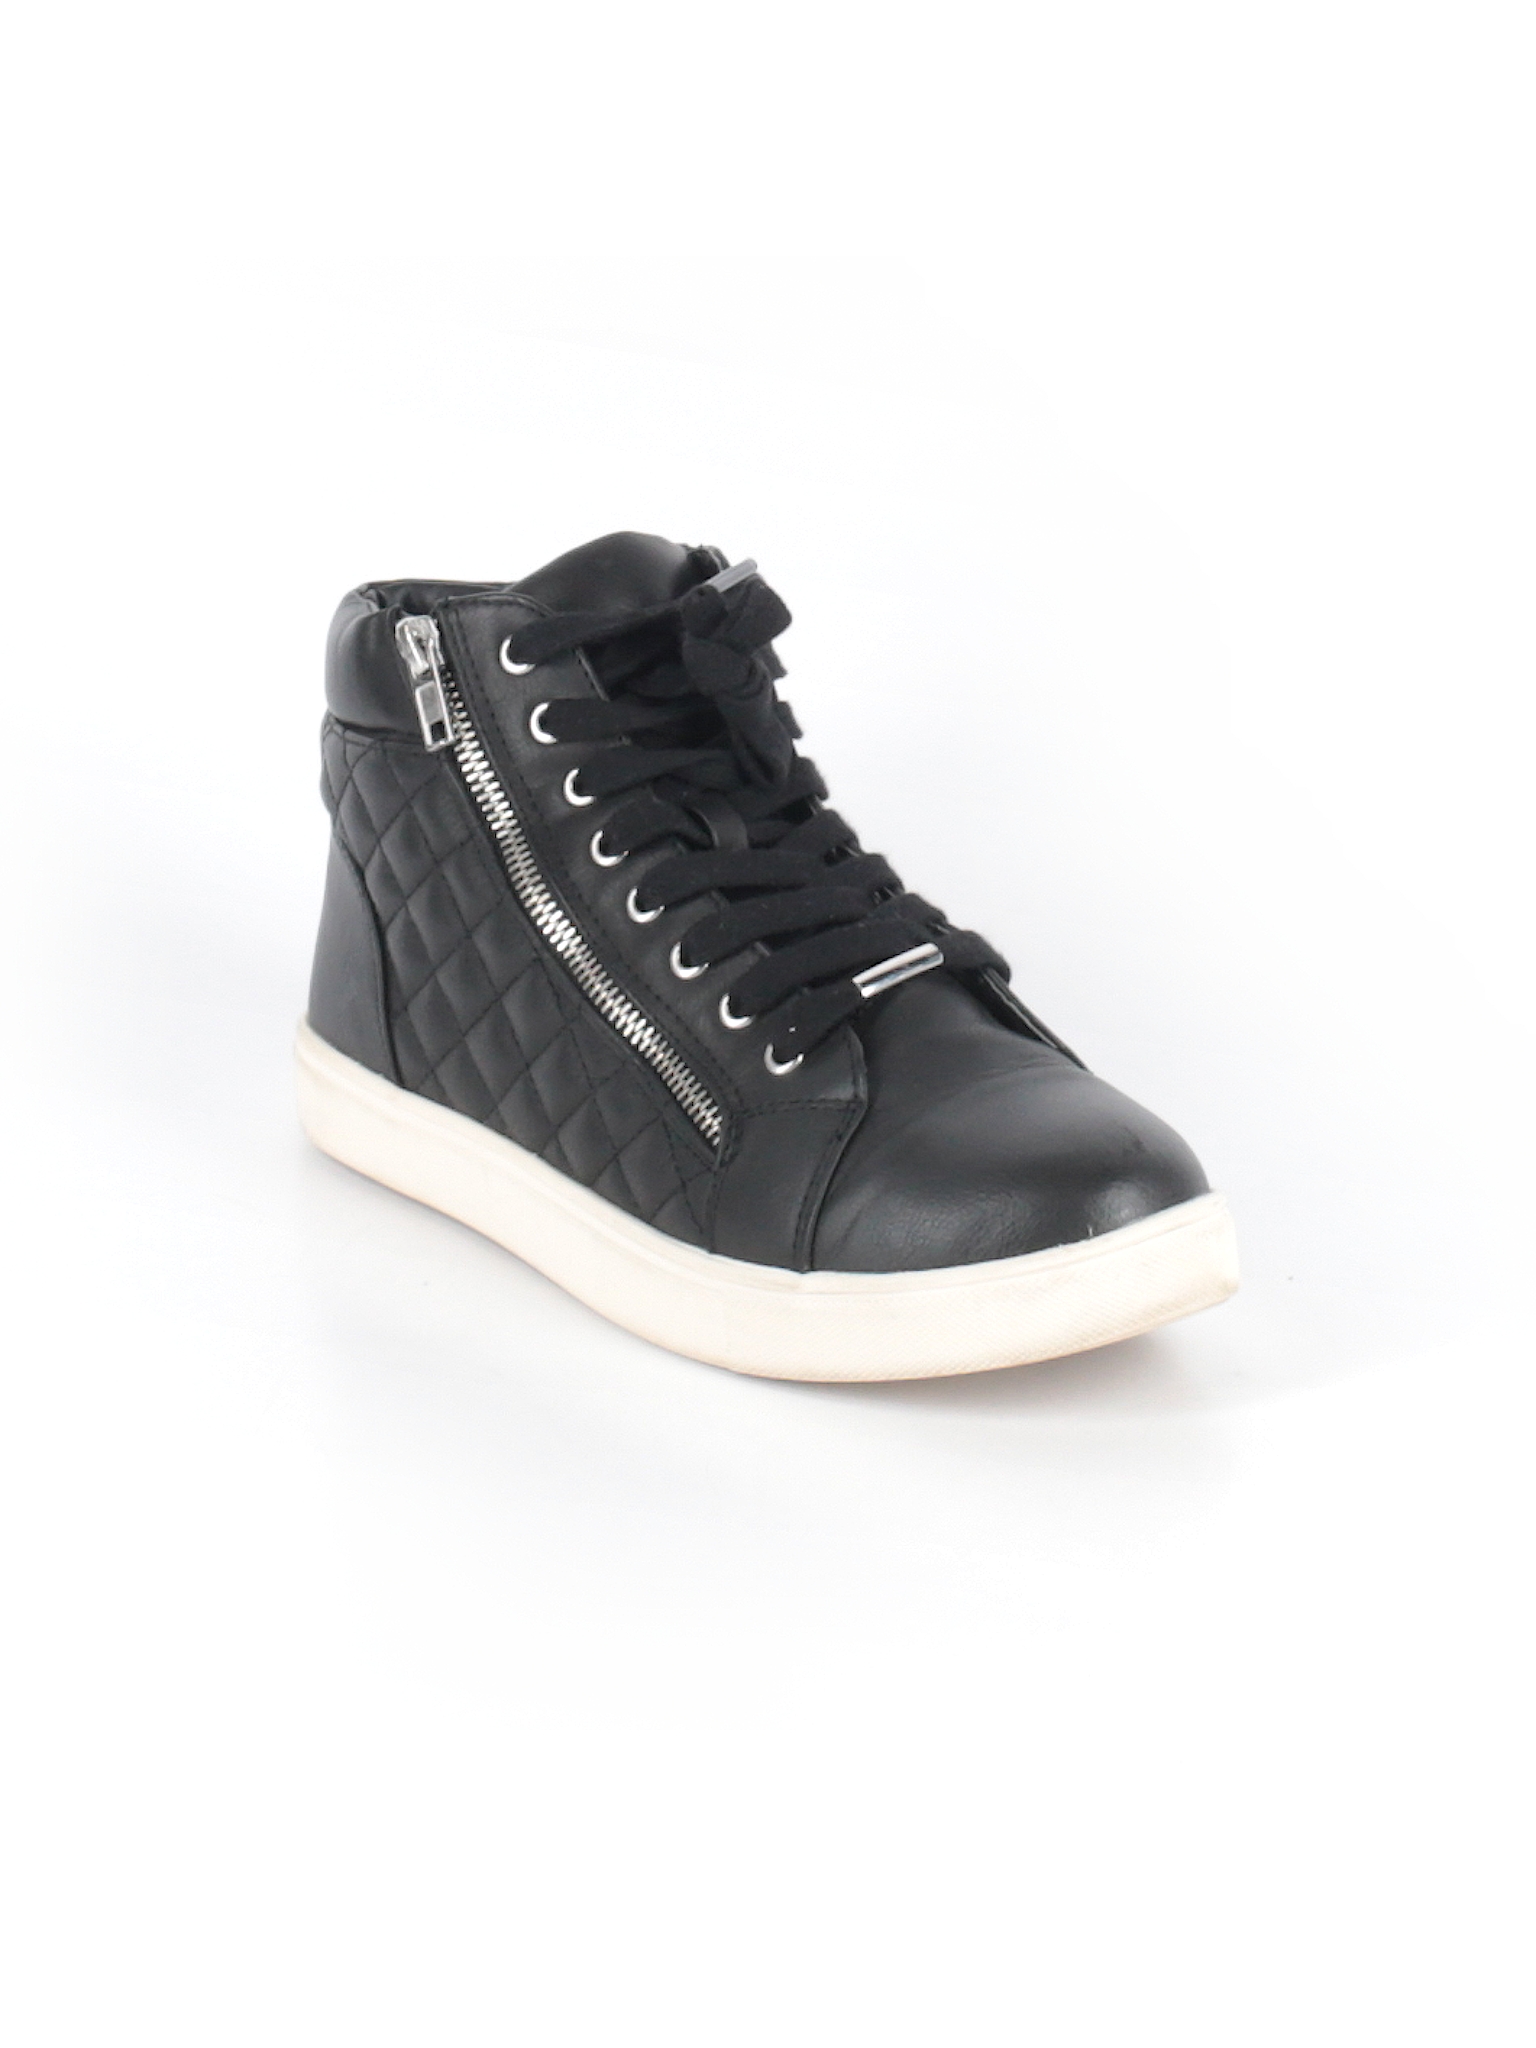 Steve Madden Solid Black Sneakers Size 8 1/2 - 67% off | thredUP